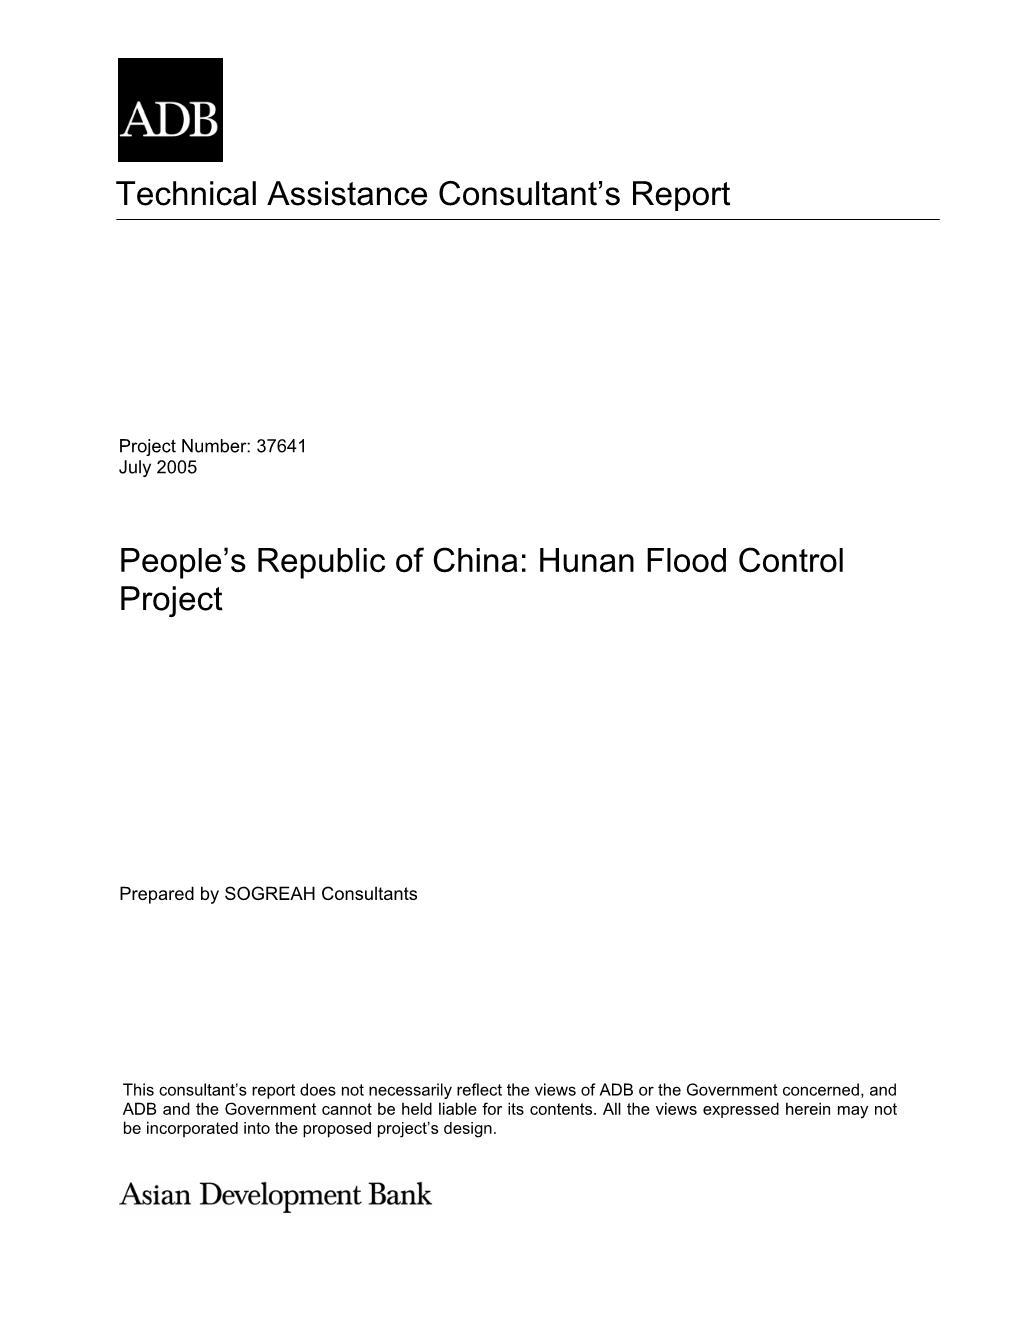 Hunan Flood Control Project